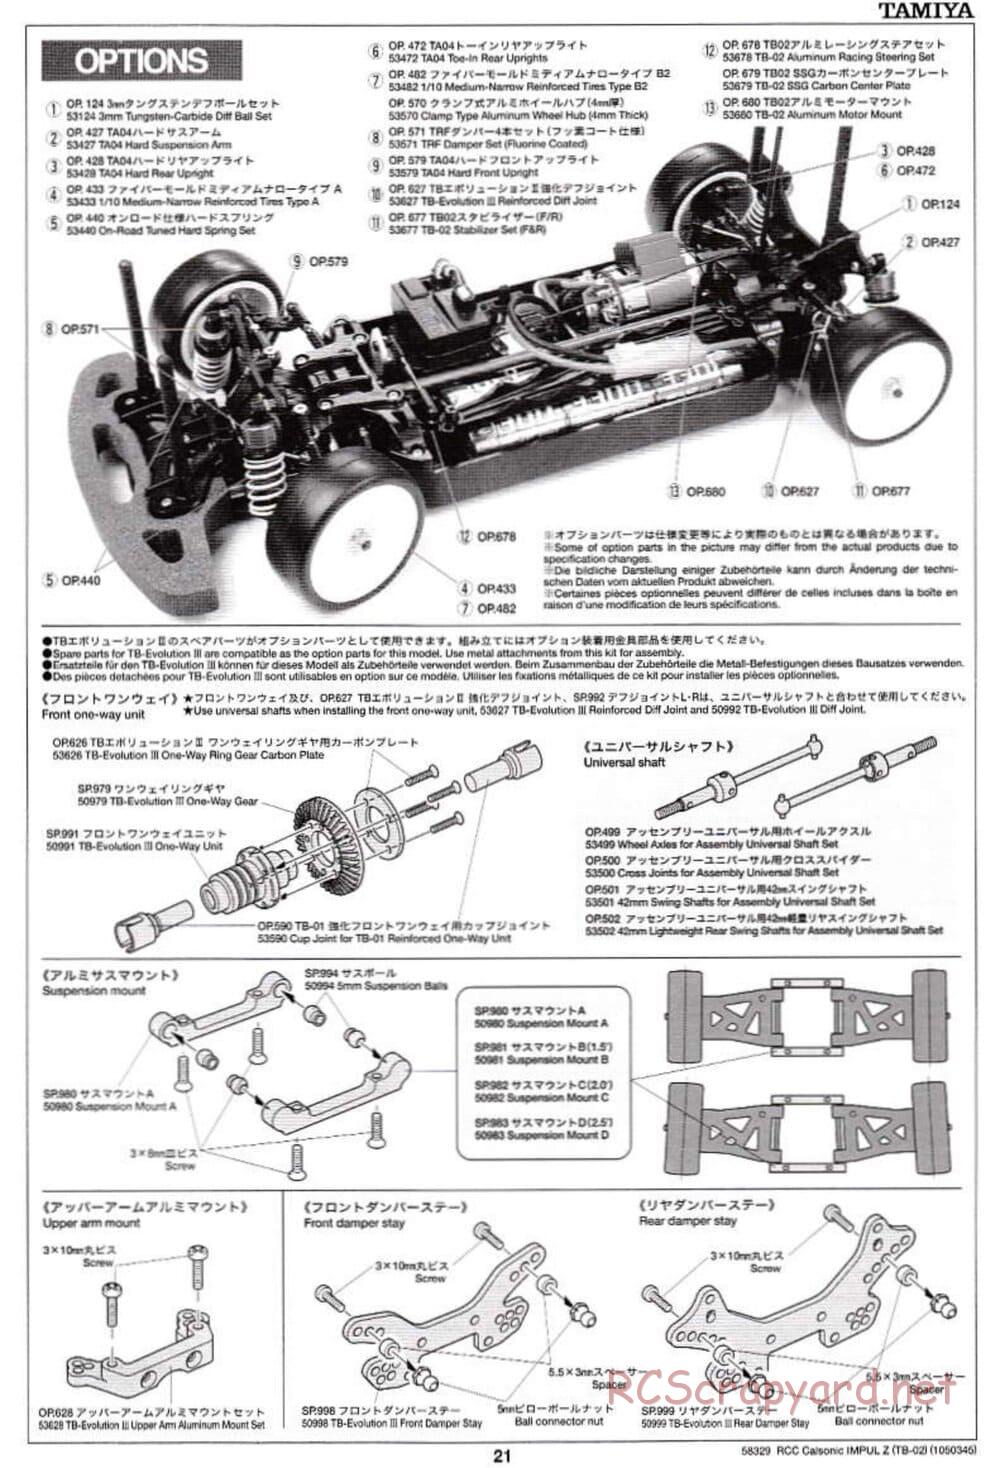 Tamiya - Calsonic Impul Z - TB-02 Chassis - Manual - Page 21